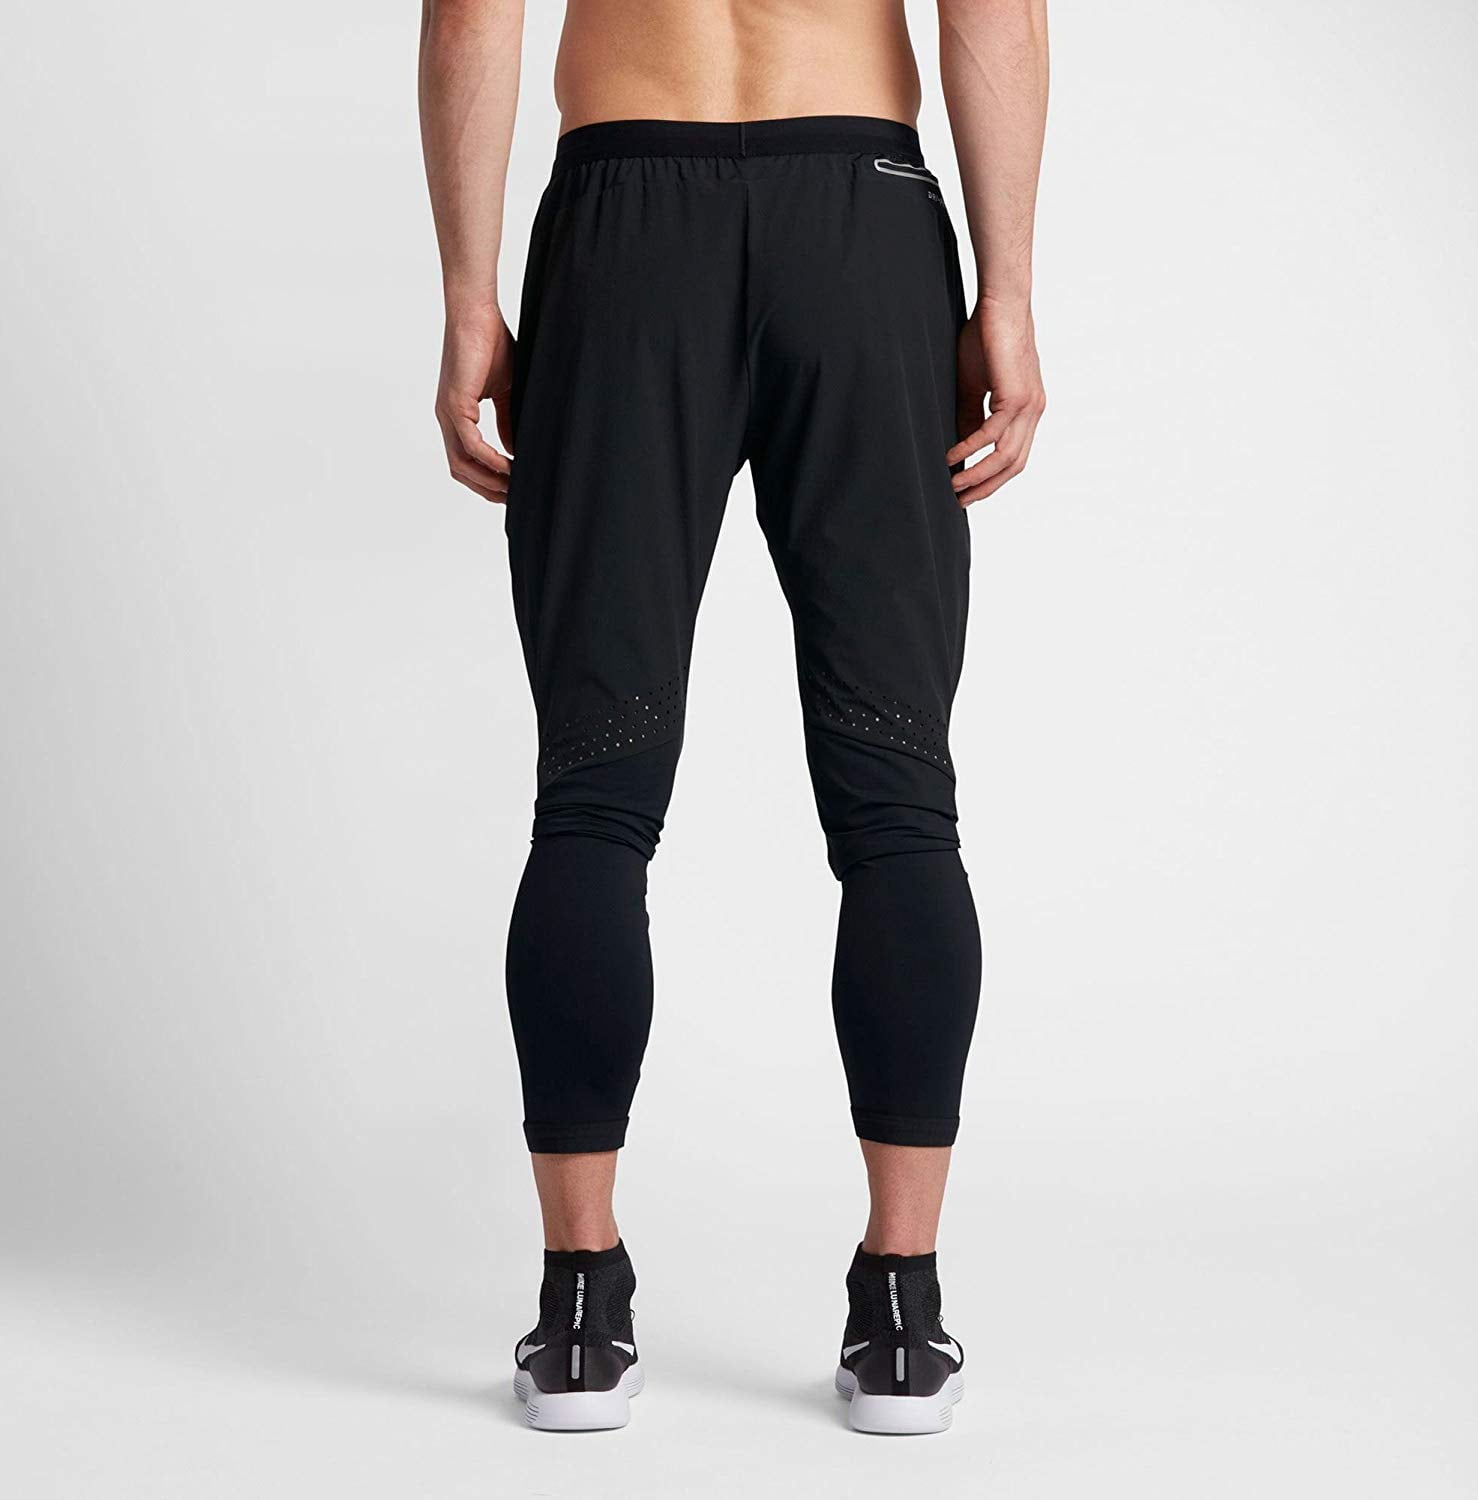 Banket dosis legaal Nike Men's Flex Swift Running Pants Size S - Walmart.com